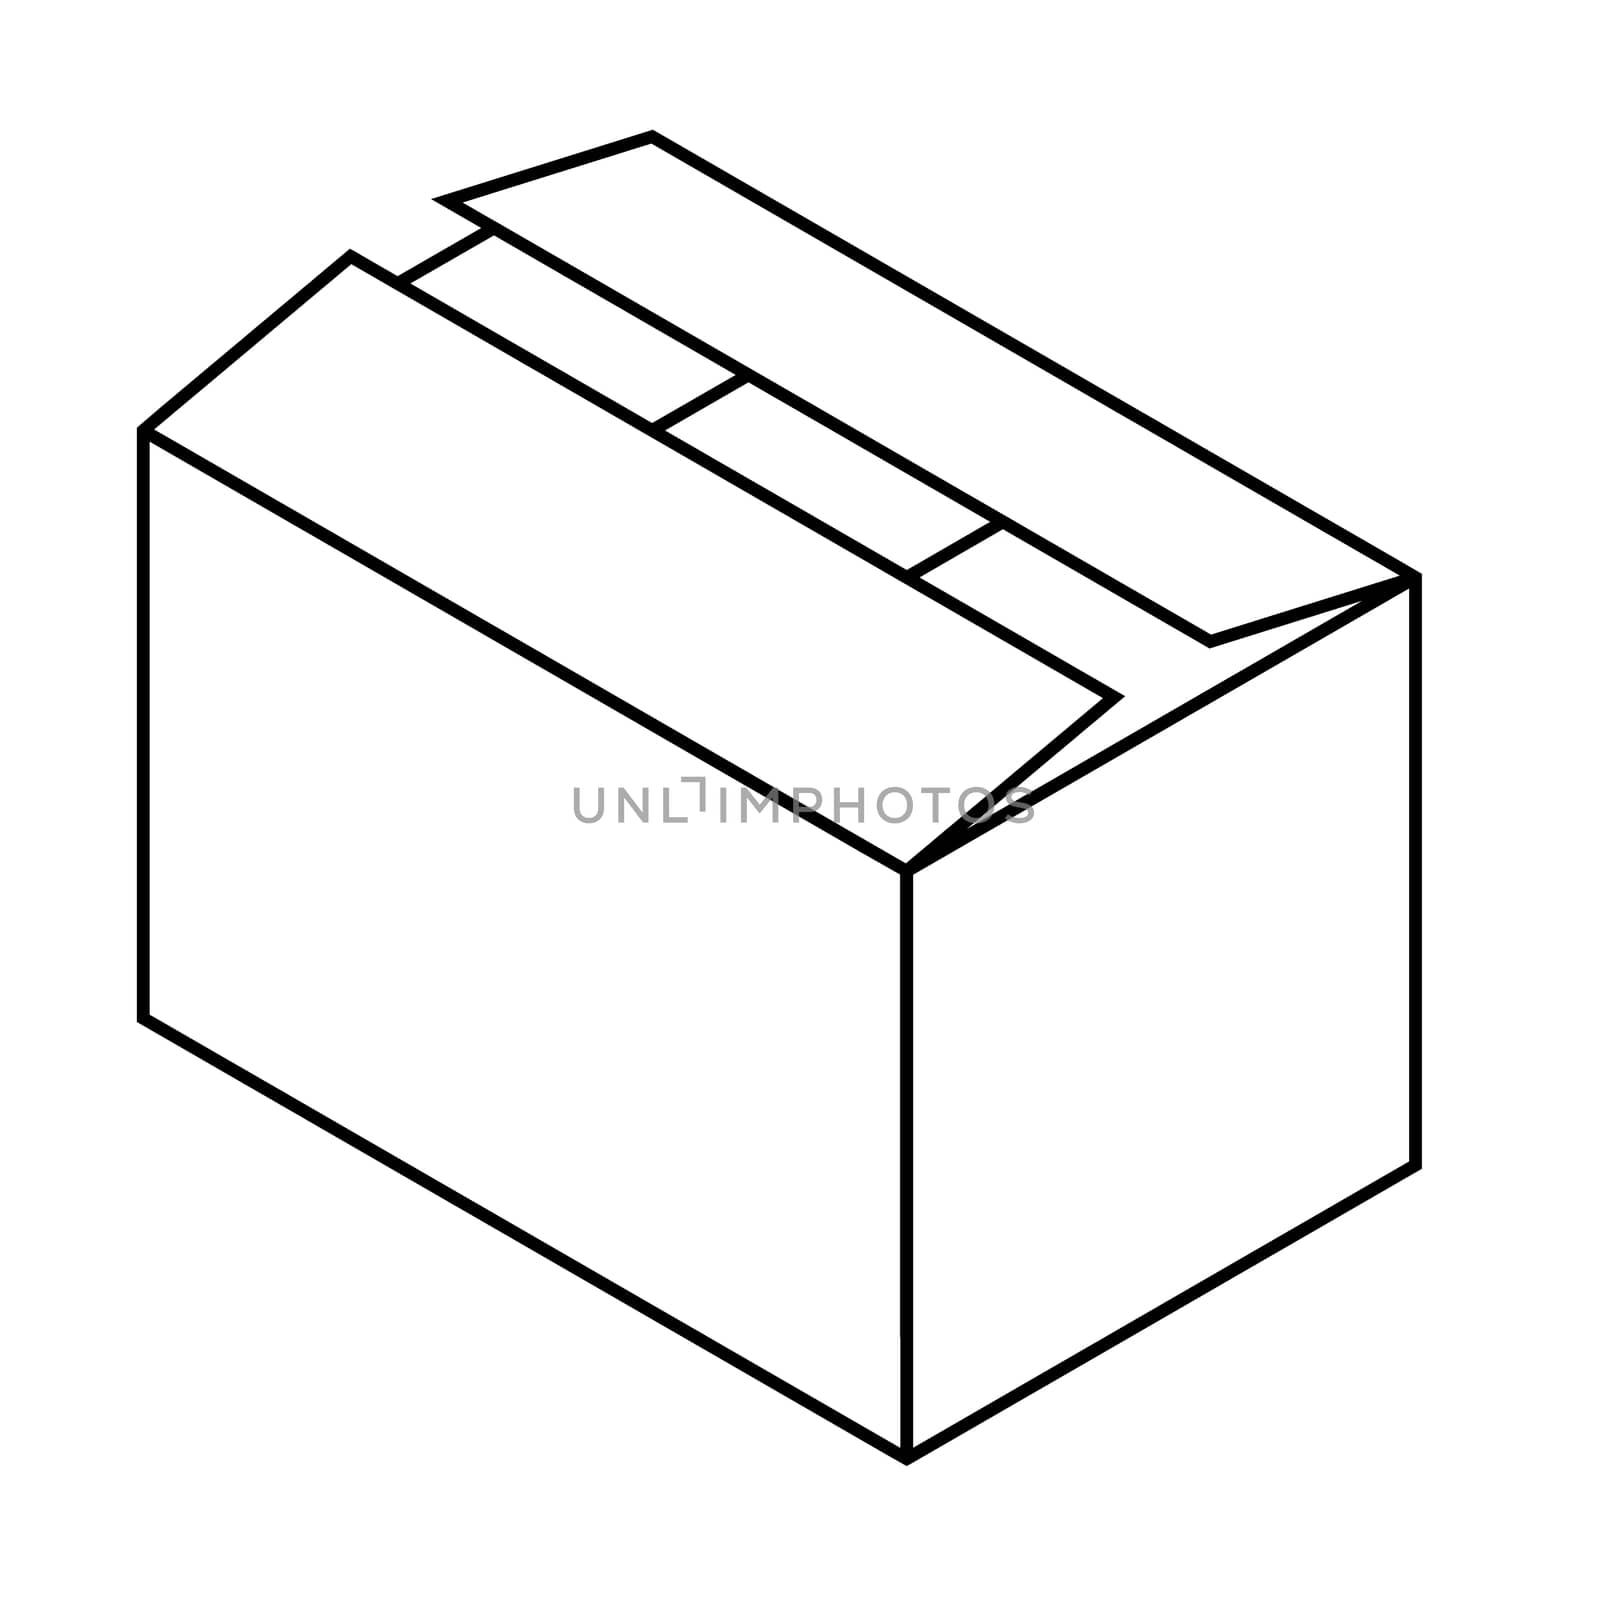 lineart box illustration by claudiodivizia